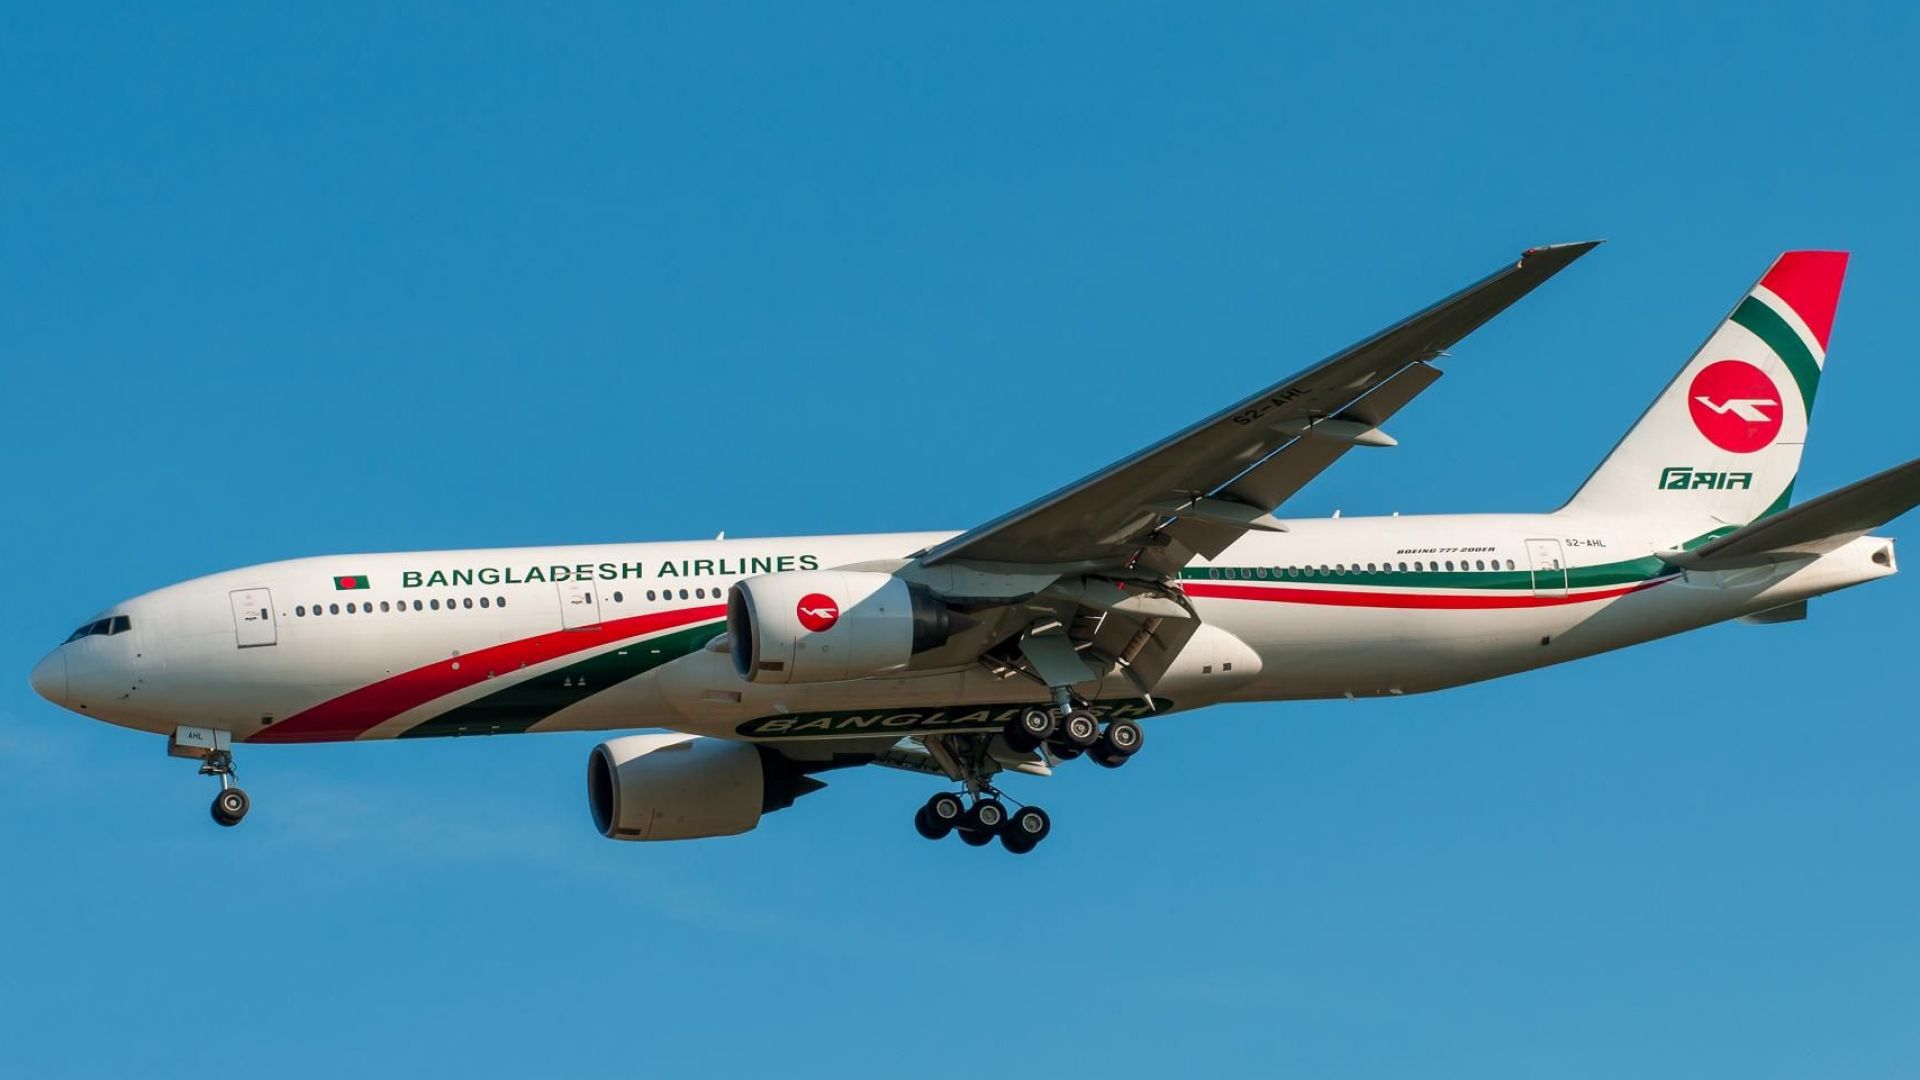 Самолет на бангладешките авиолинии Биман изпълняващ полет от бангладешката столица